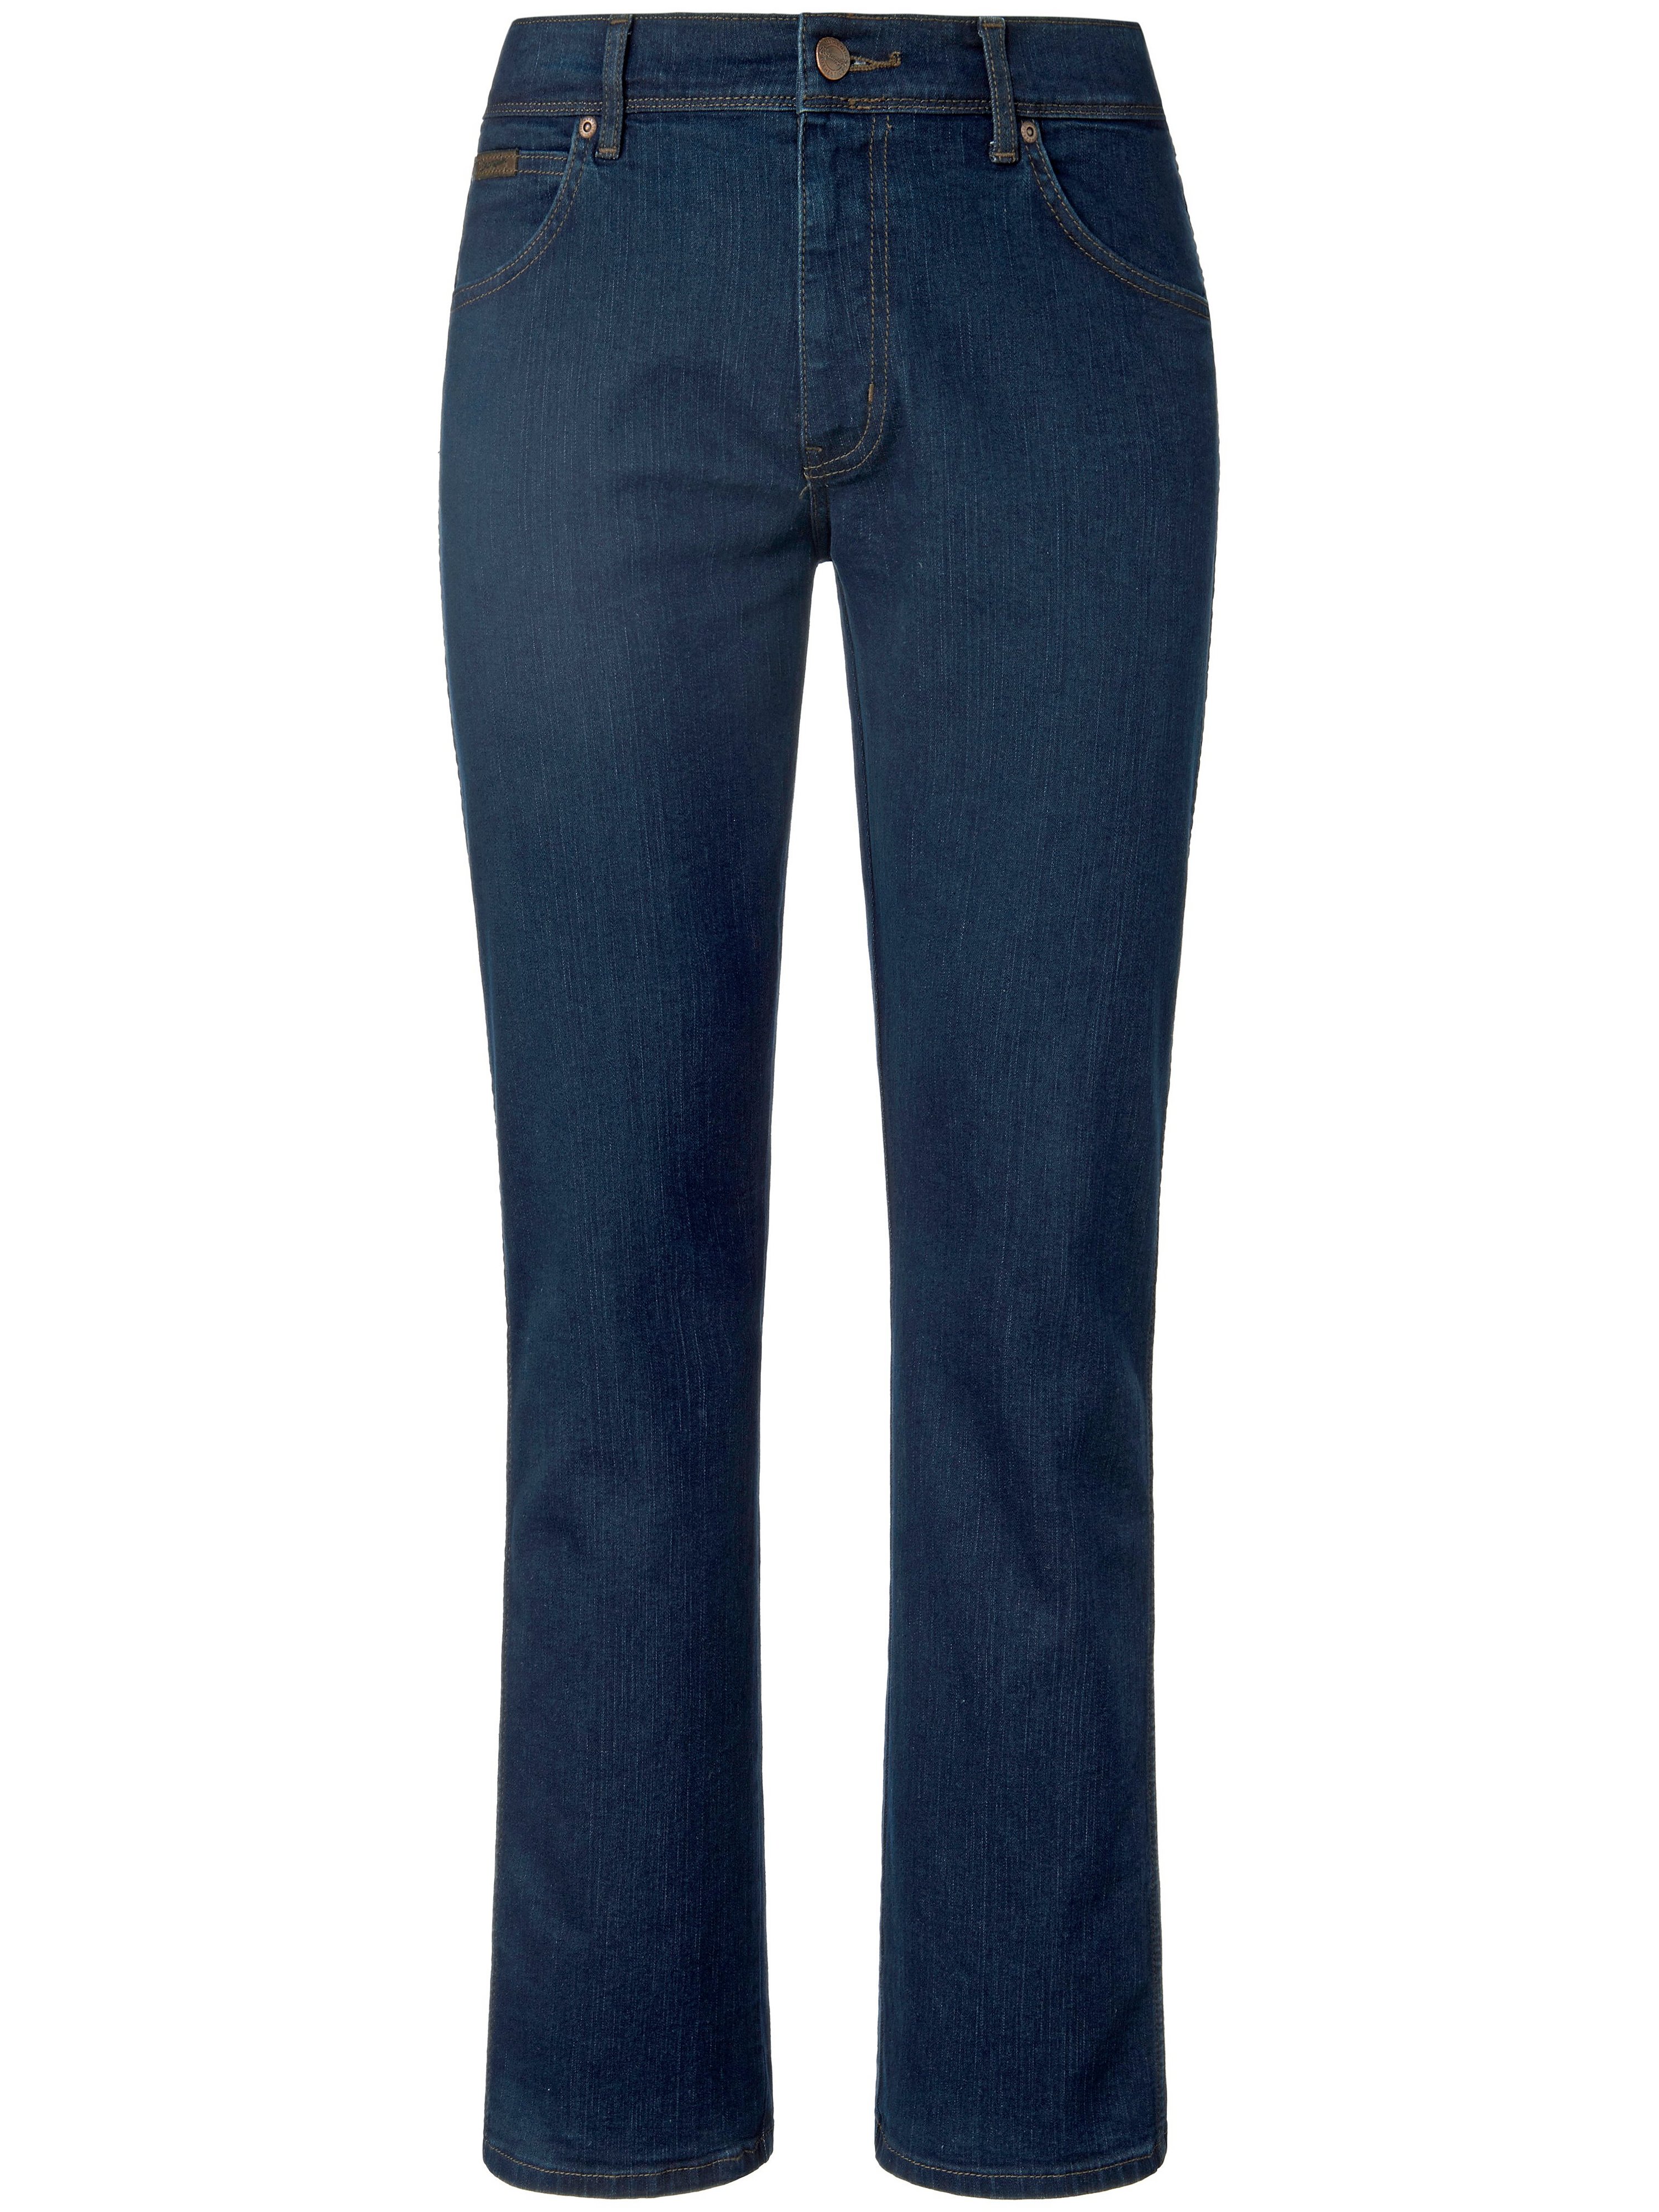 Jeans, Inch 32 Wrangler blau Größe: 35